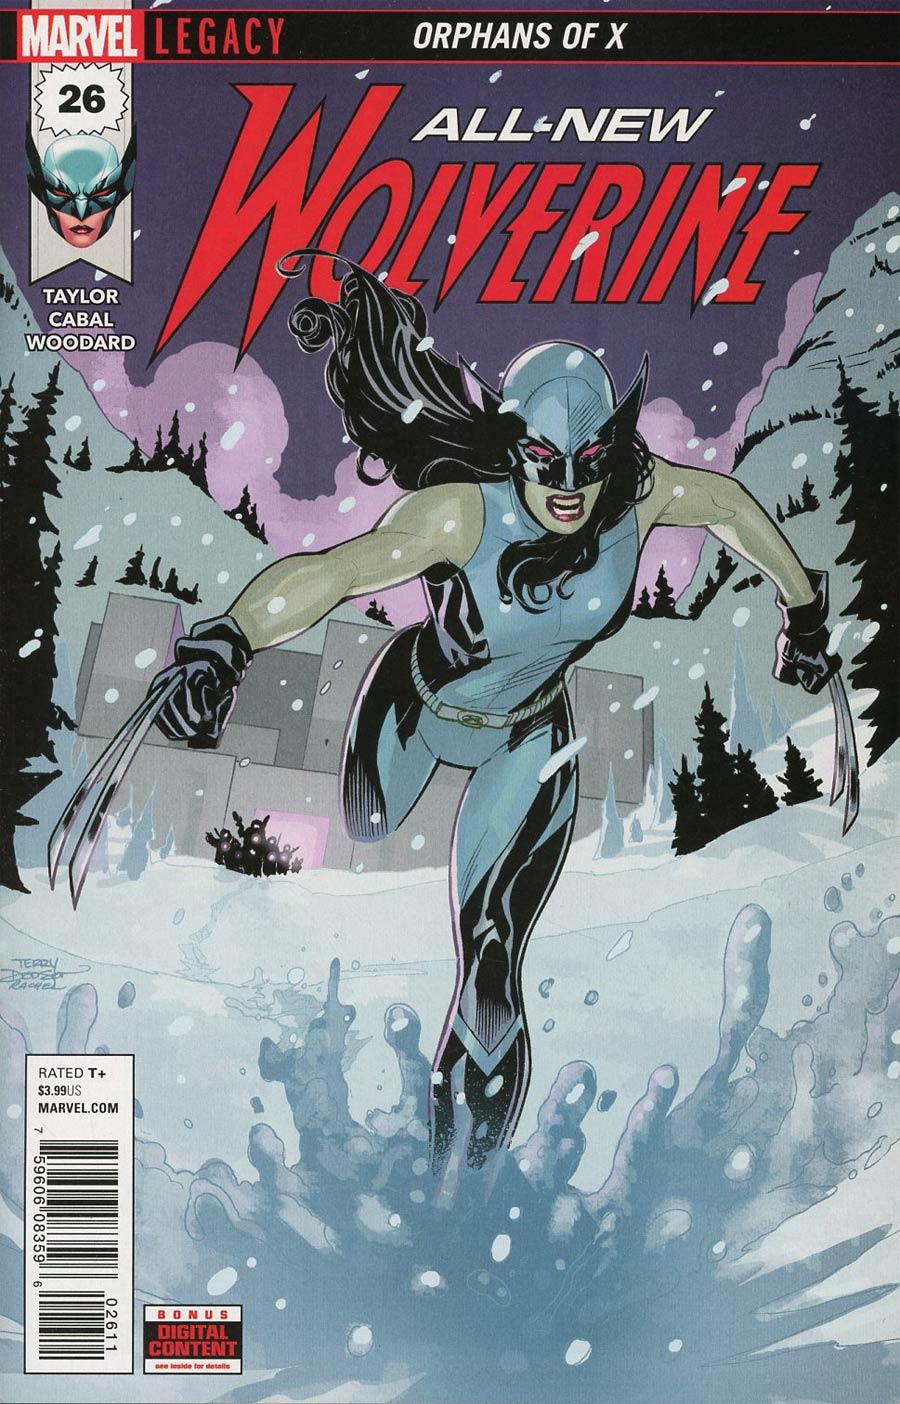 All-New Wolverine Vol. 1 #26